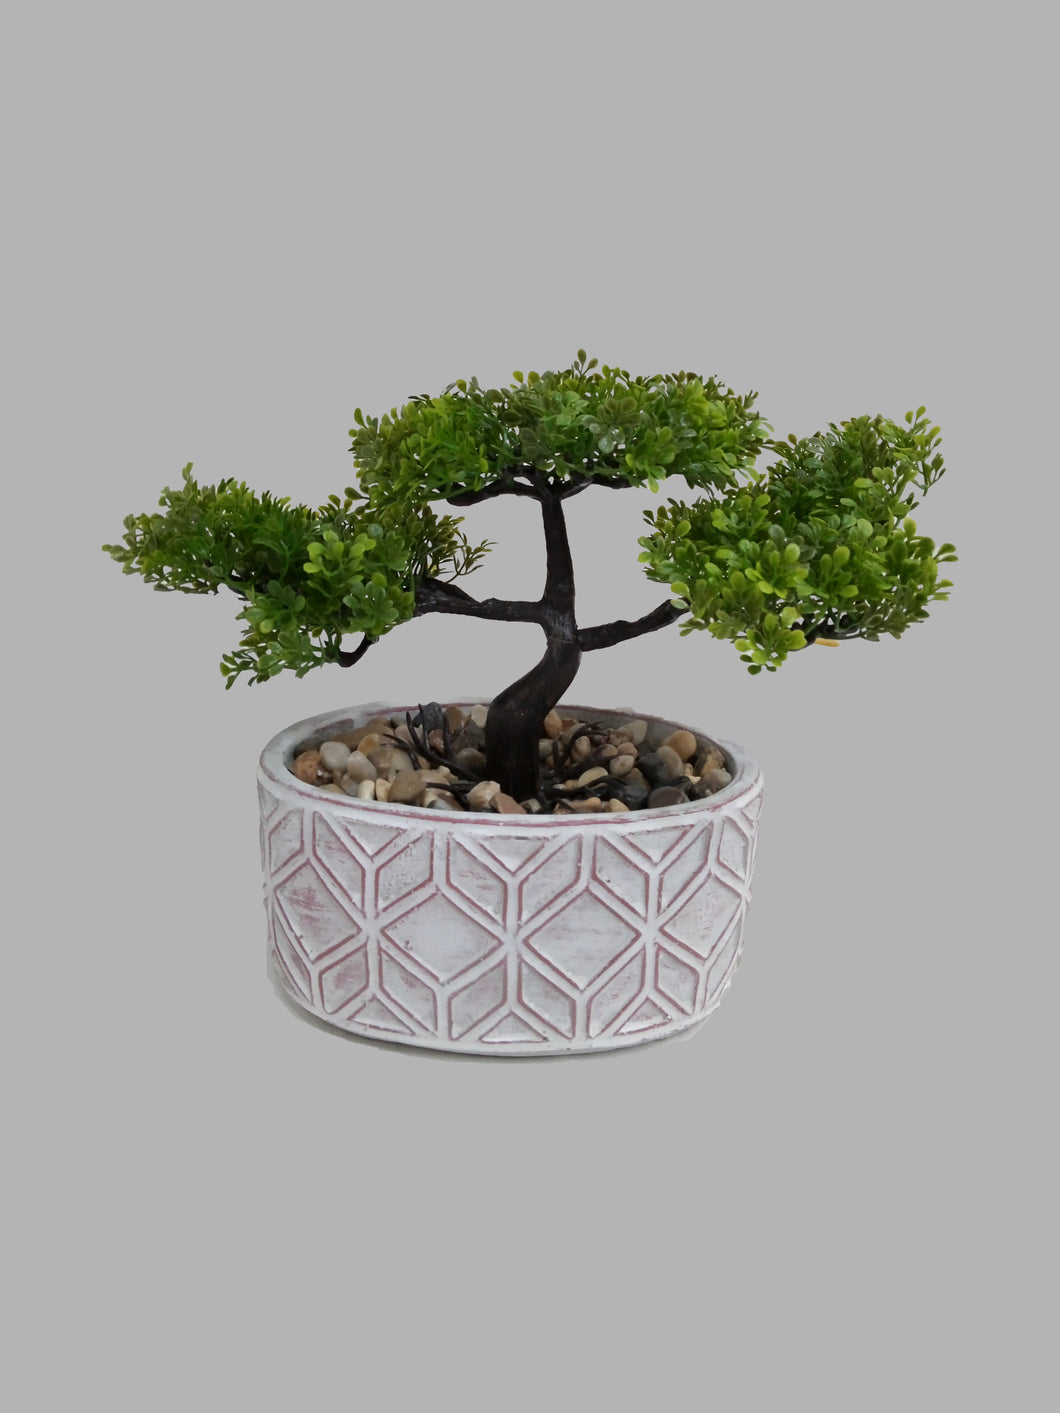 Brown Ceramic For With Artifical Bonsai Plant نبات صناعي سيراميك بني اللون مع نبات البونساي الأصطناعي